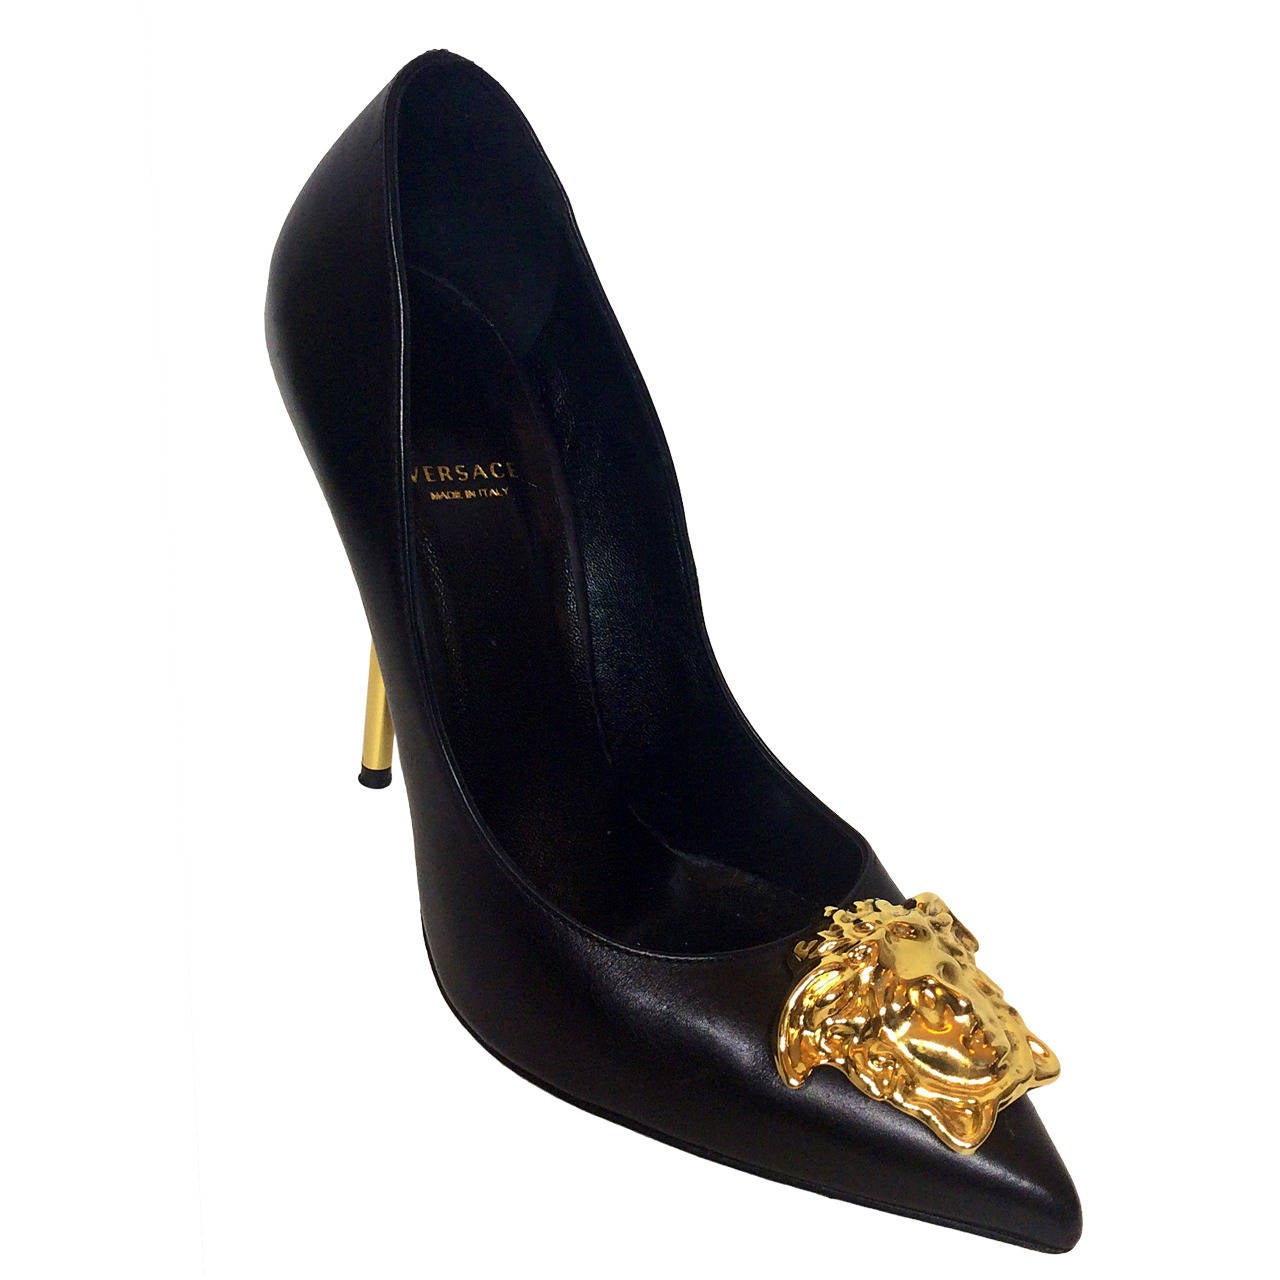 Versace Palazzo Stiletto Gold Medusa High Heels 39 1/2 at 1stdibs